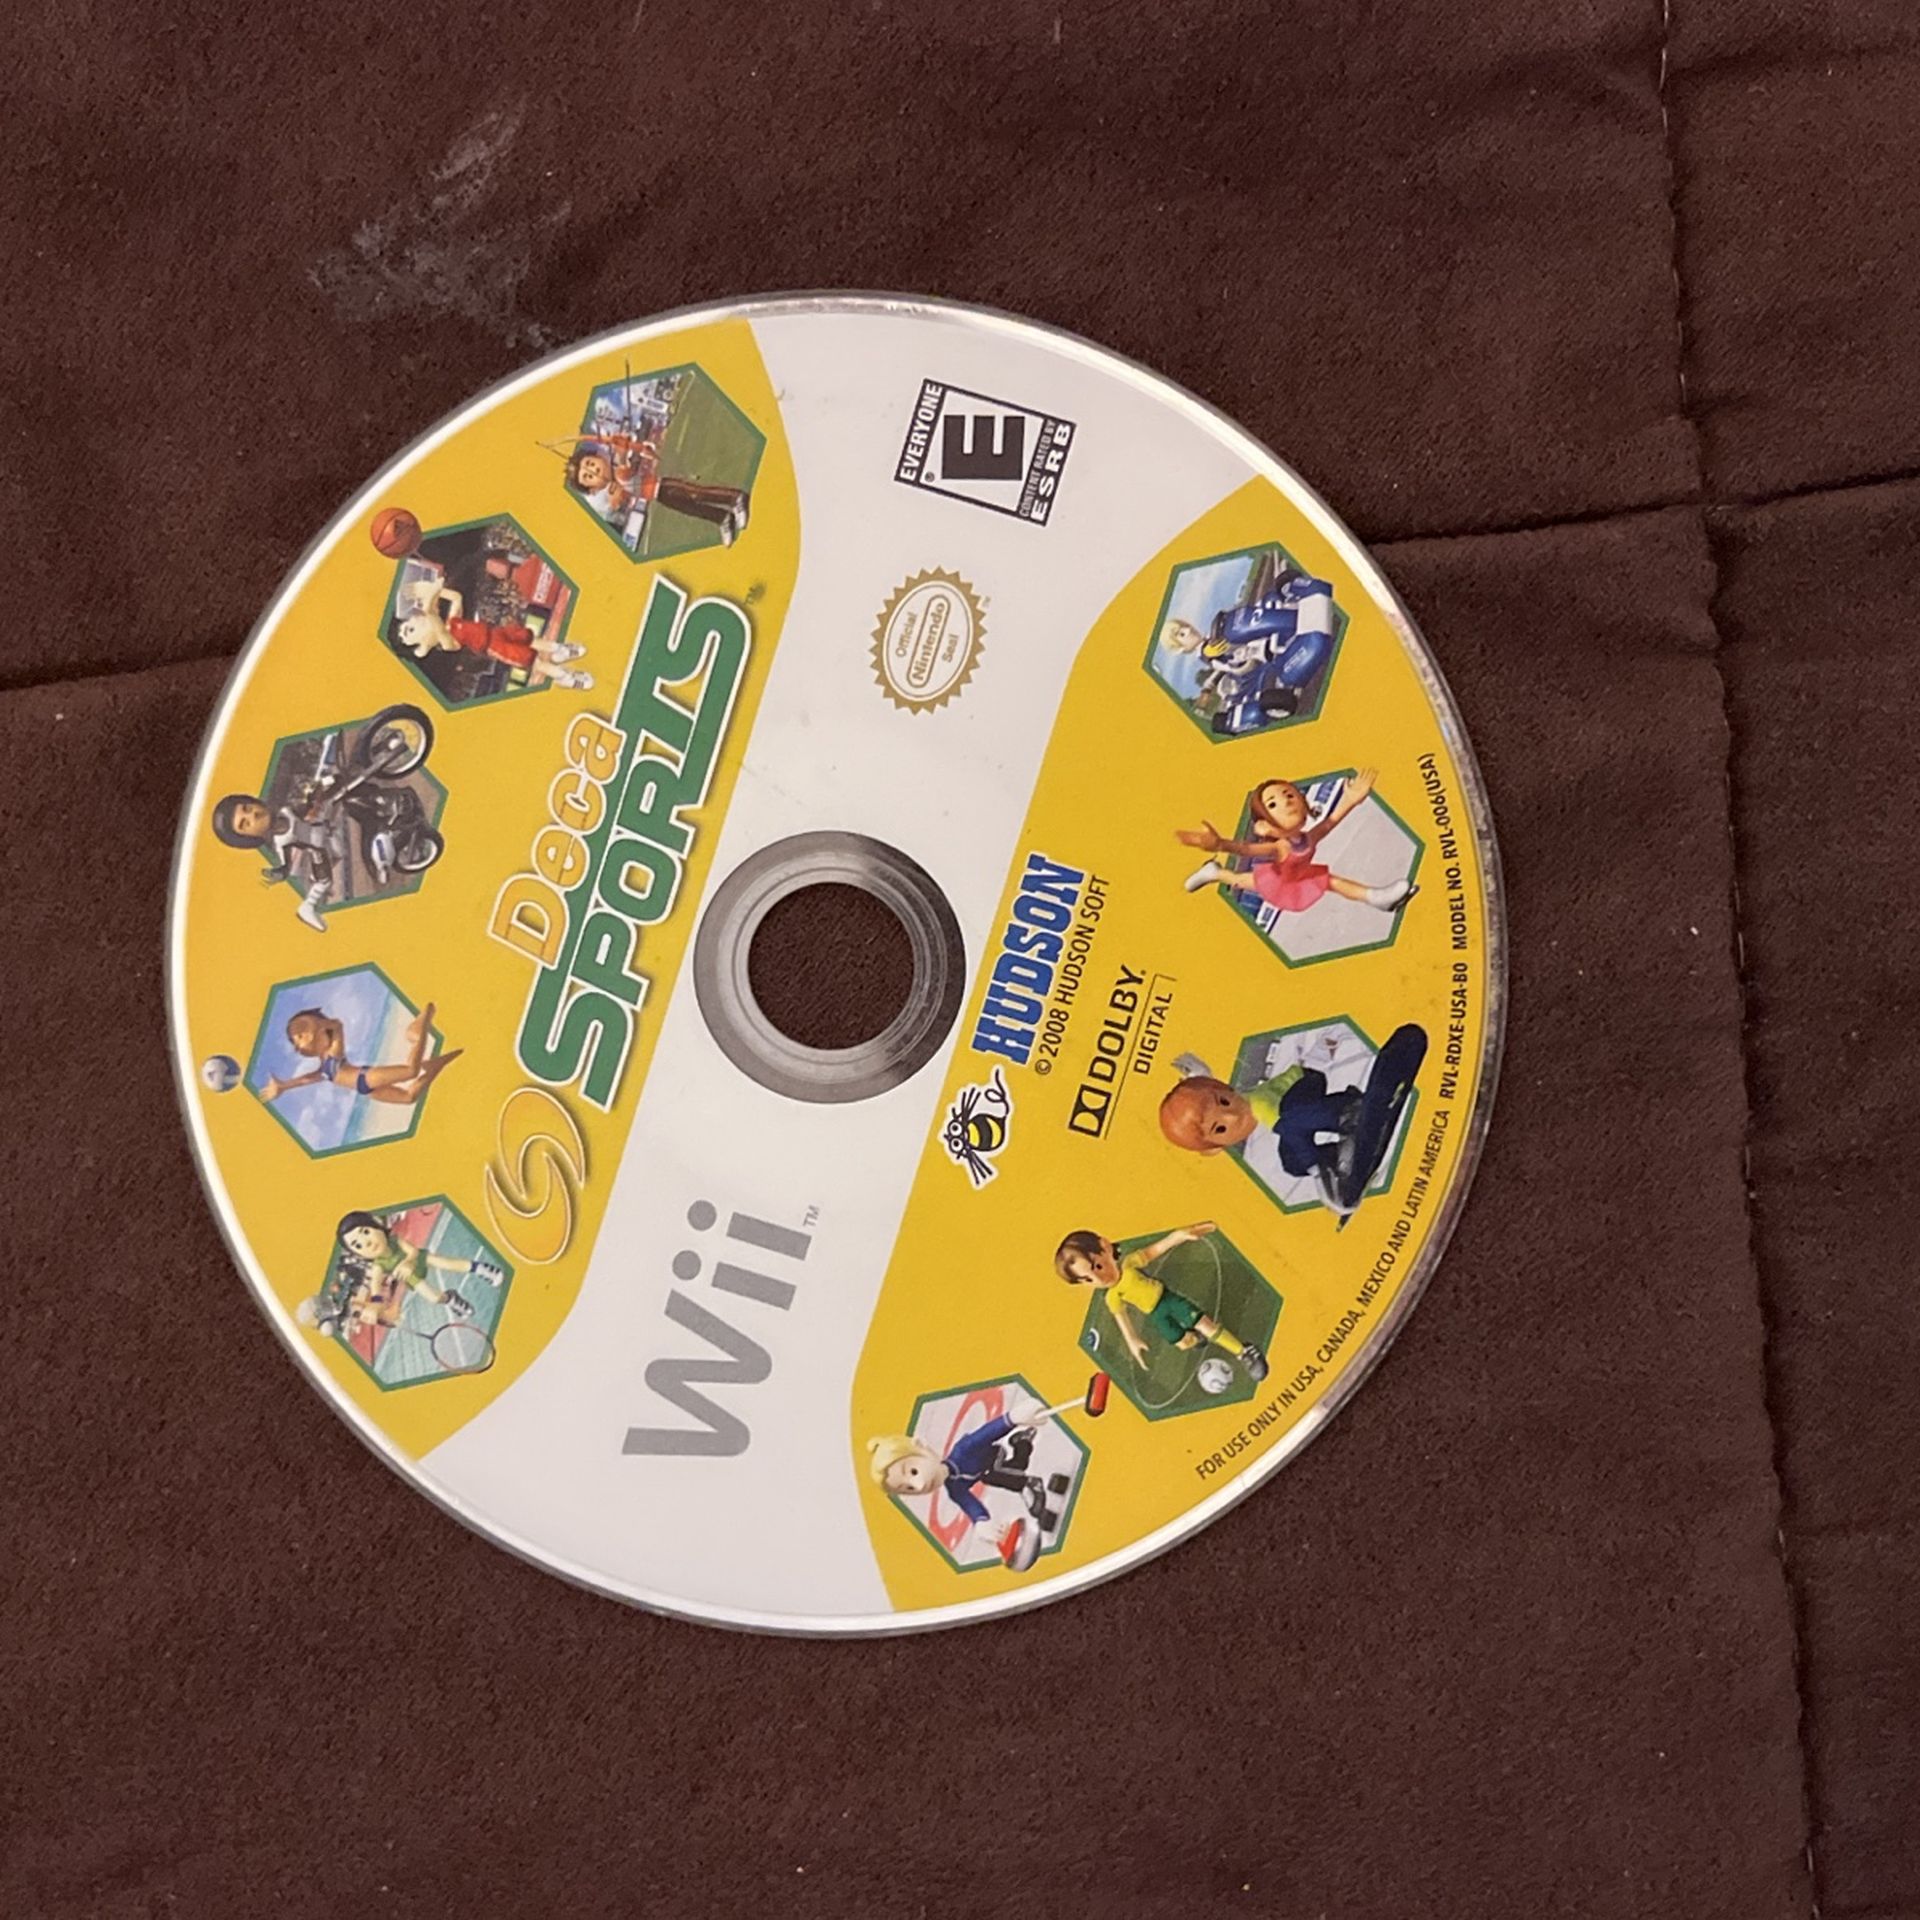 Deca Sports Wii